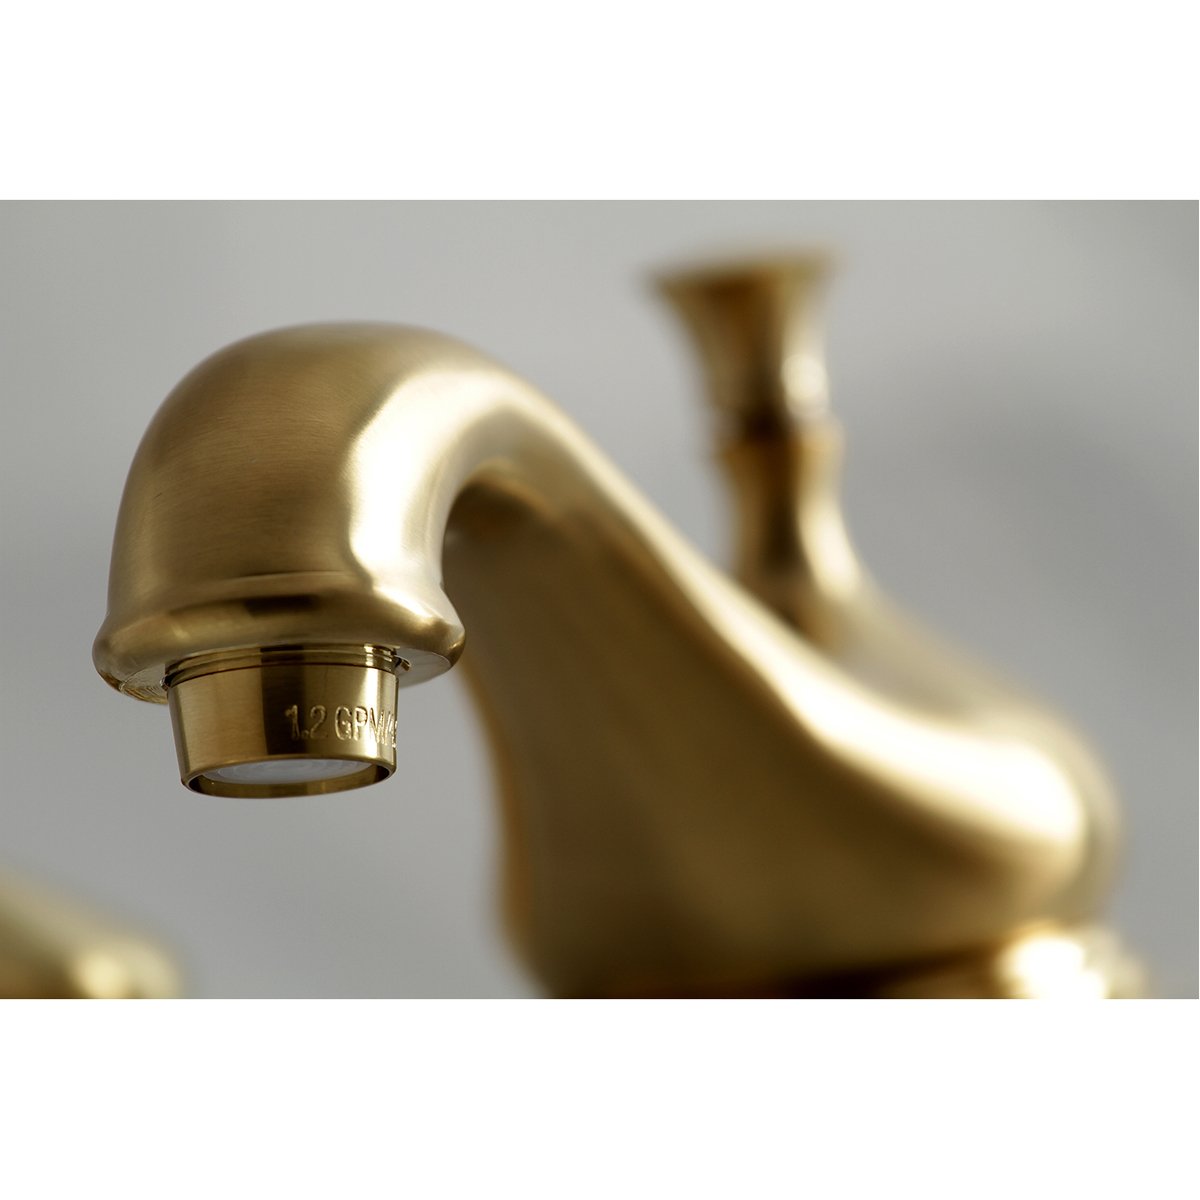 Kingston Brass Essex 3-Hole 8-Inch Widespread Bathroom Faucet